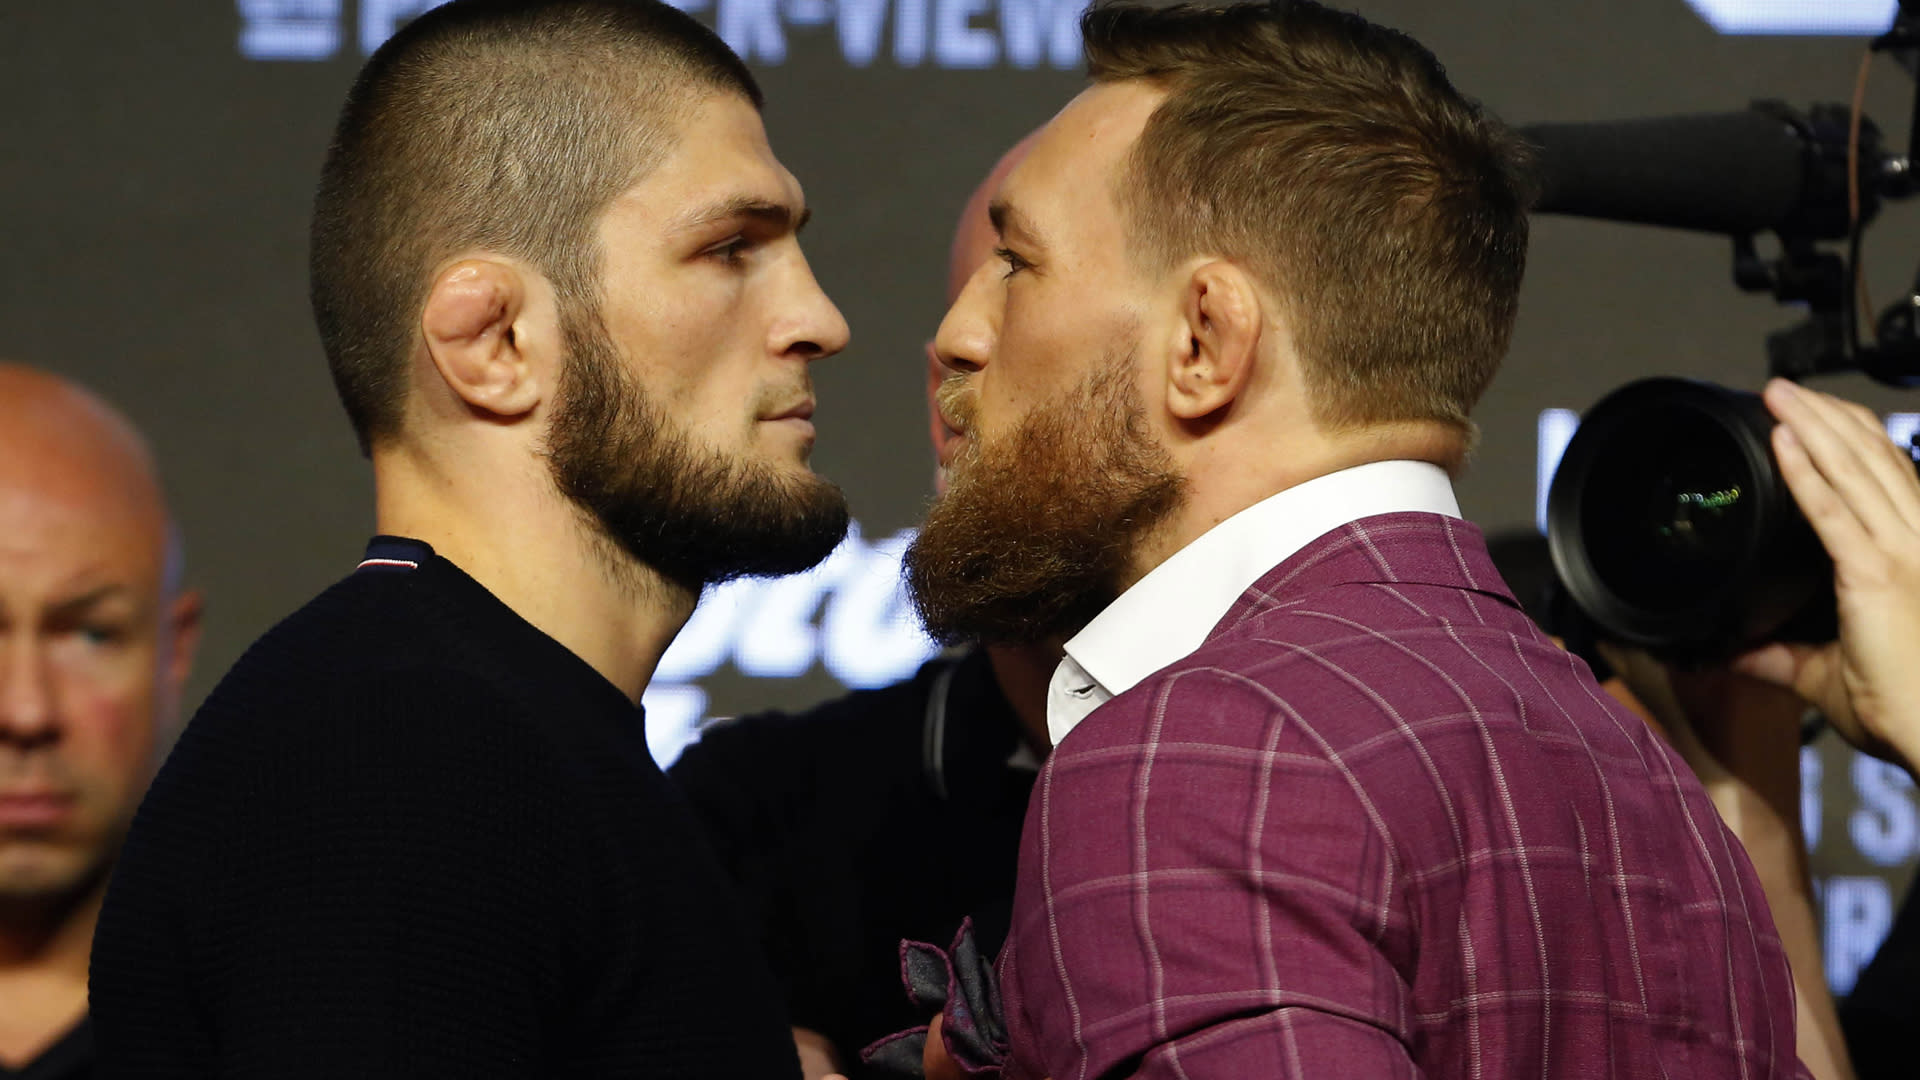 Conor McGregor vs. Khabib Nurmagomedov live stream: Watch UFC 229 online1920 x 1080